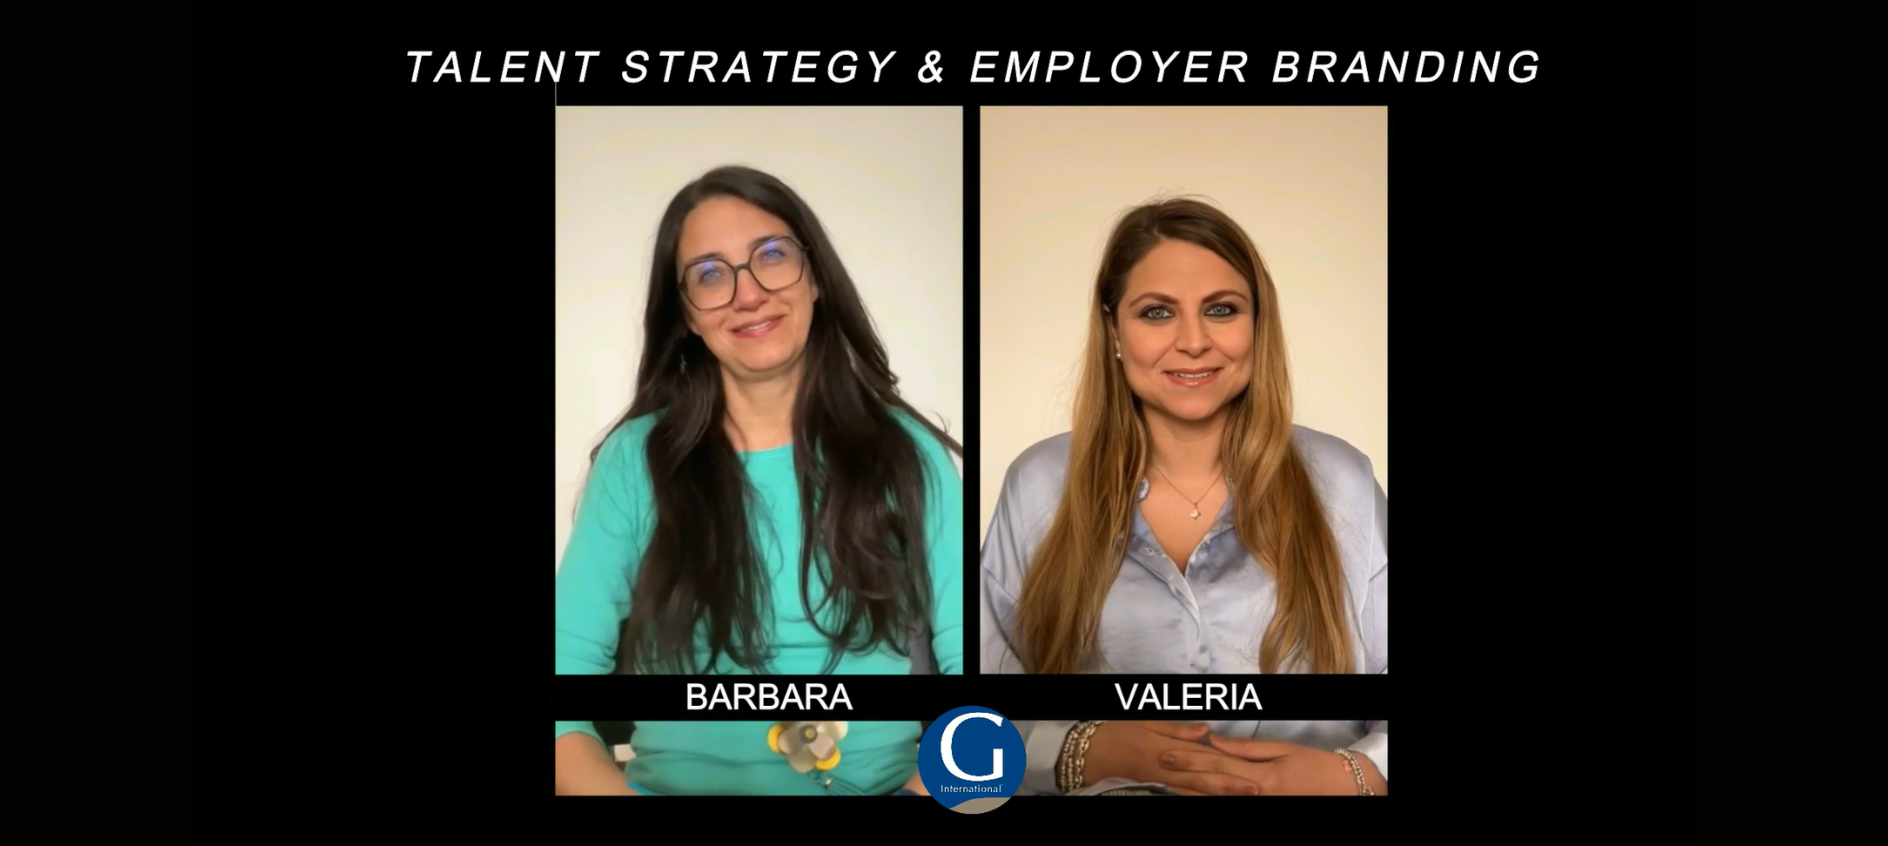 Glasford International Italy Meet the Talent Strategy & Employer Branding Team